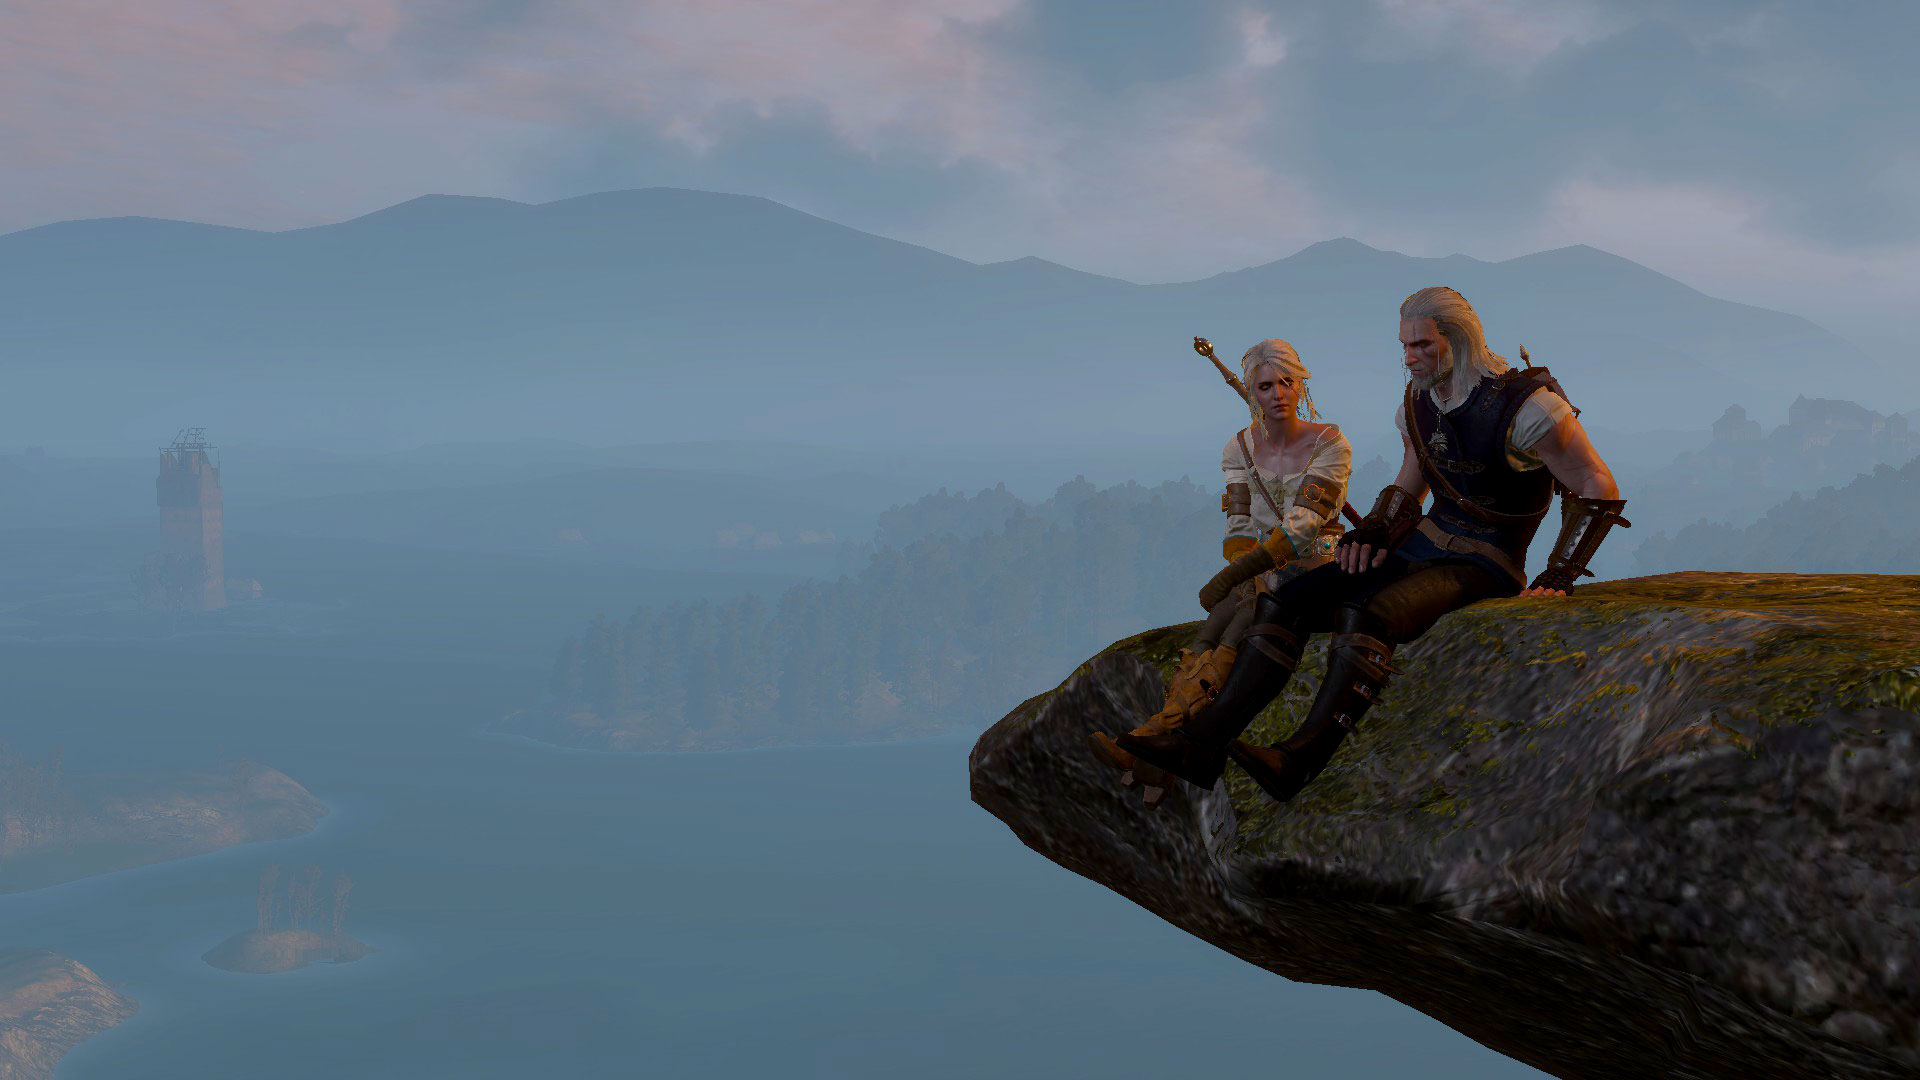 Ciri And Geralt Talking On A Rock Ledge